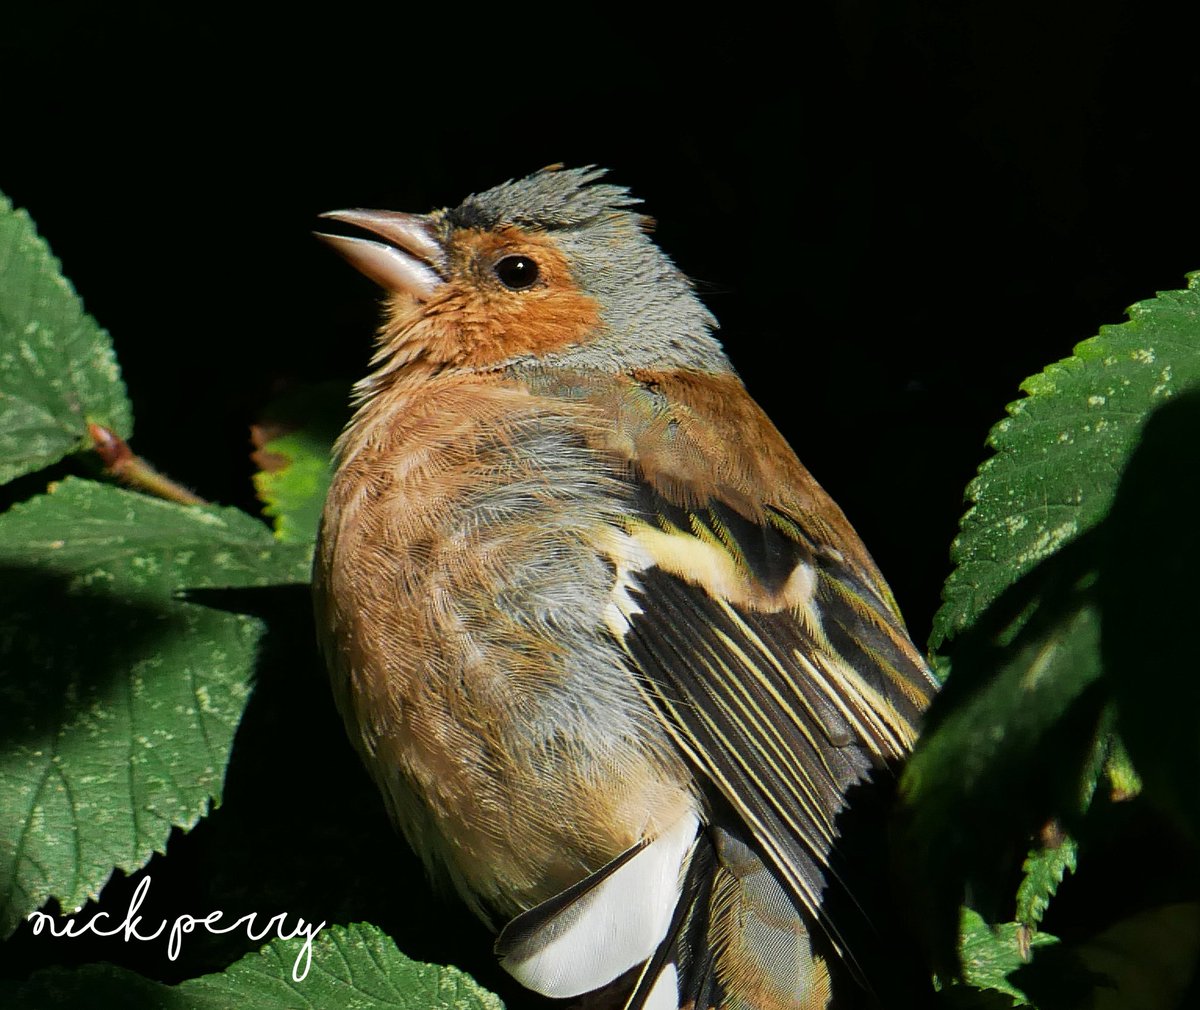 One more for #FinchFriday 
Chaffinch cooling down in a bush on a hot summers day😎
#TwitterNatureCommunity 
#TwitterNaturePhotography 
#BirdsSeenIn2023 #birdphotogrpahy #WildlifeWeek2023 #birdwathing
#BirdsOfTwitter #NatureTherapy